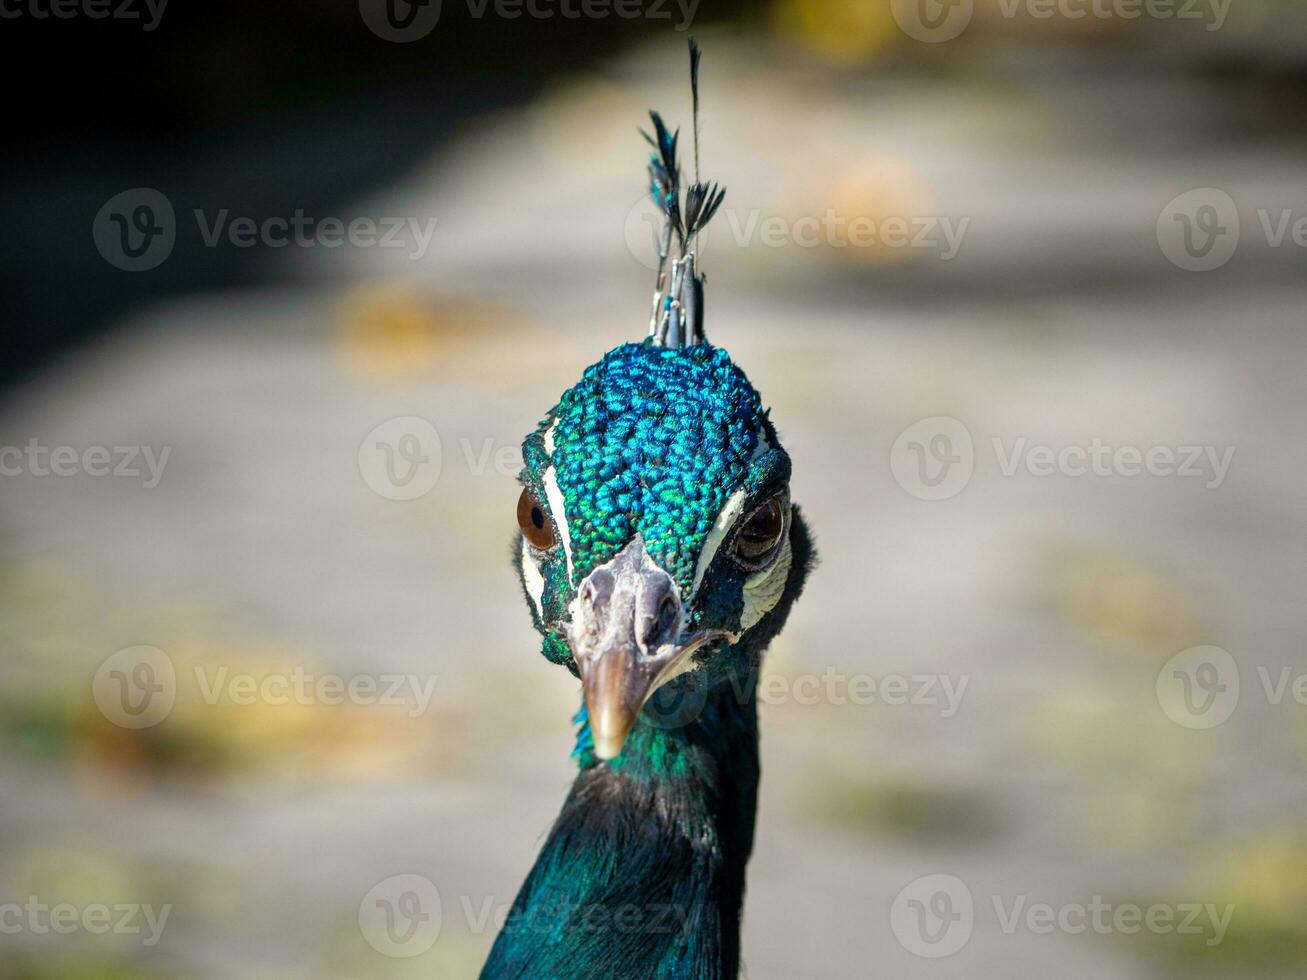 Shiny blue and green peacock - head closeup shot photo